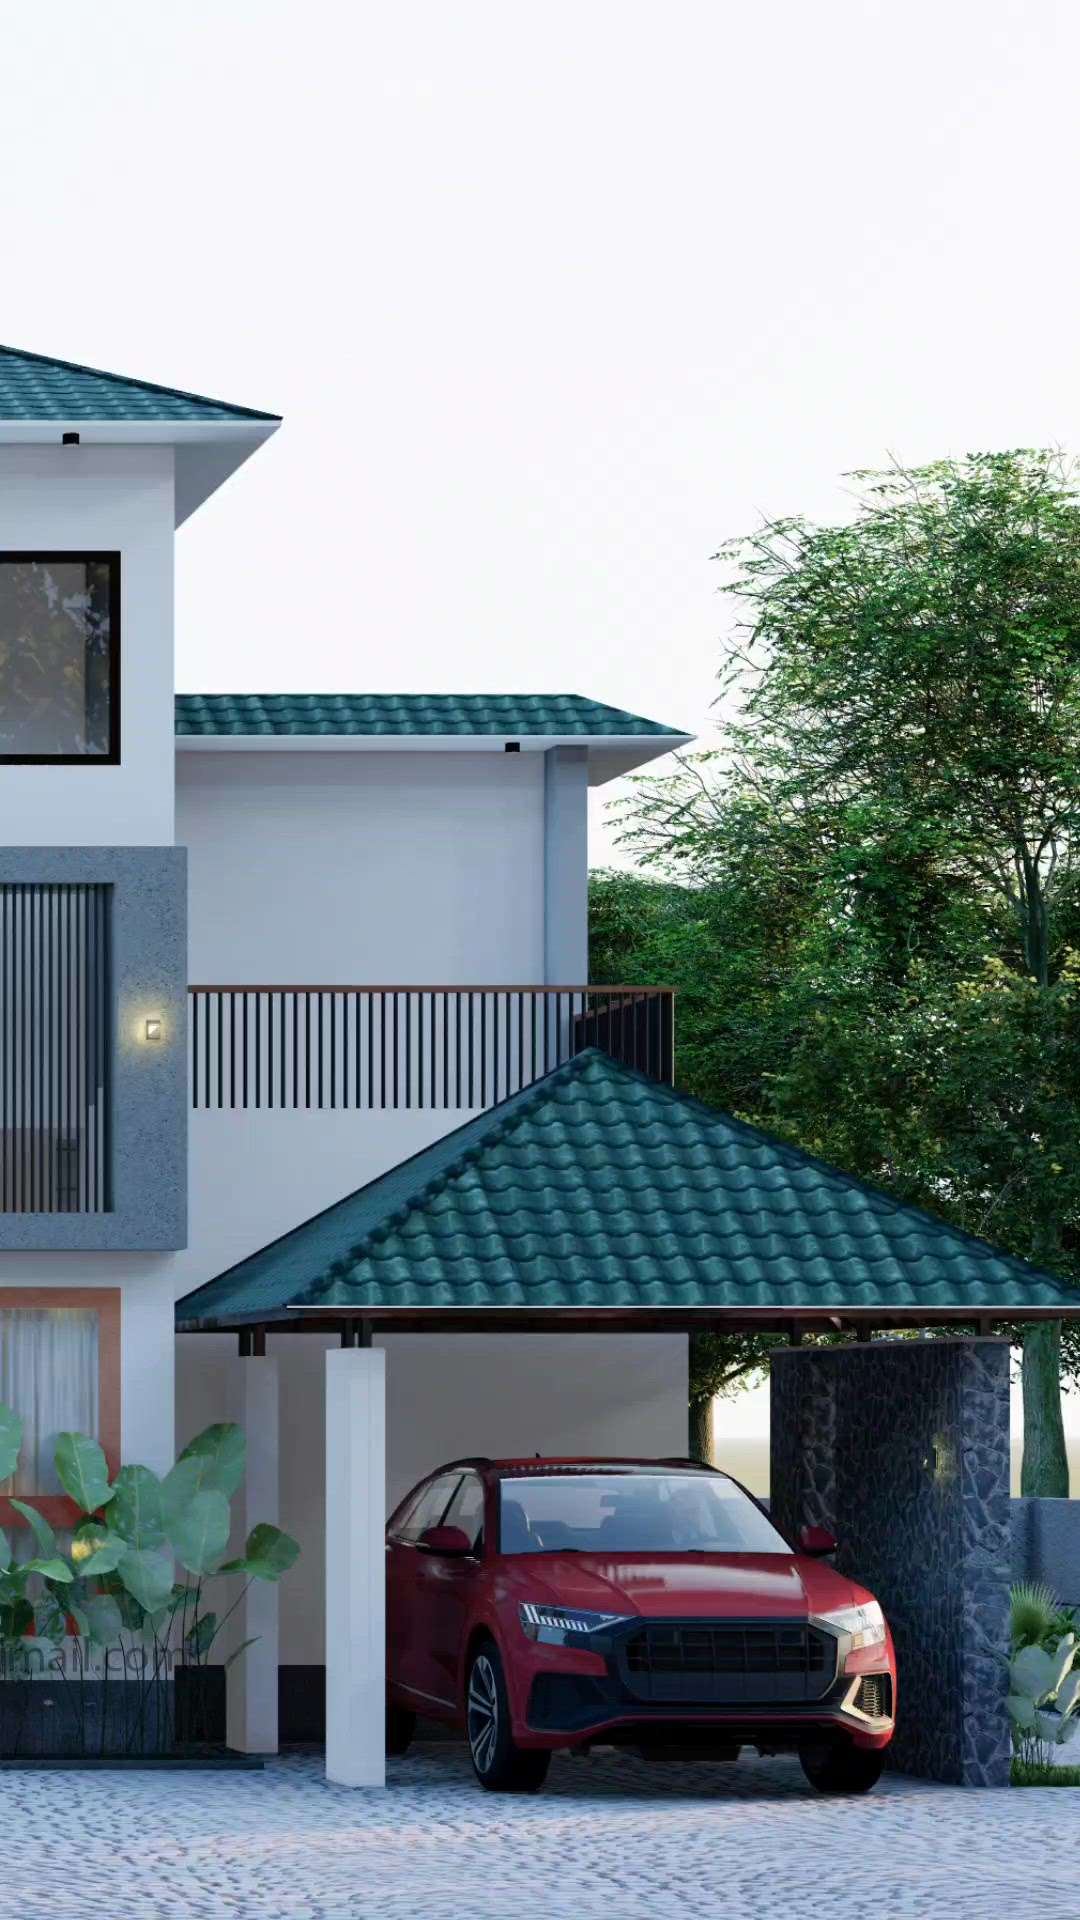 3BHK house #KeralaStyleHouse #keralaplanners #keralahomedesignz #keralahomesdesign #keralahomedecor #keralahomesbuilders #keralahomeexterior #keralahousedesigns #keralahousestyle #keralahouseplans #architecturedesigns #Architectural&Interior #keralaarchitectdesignideas